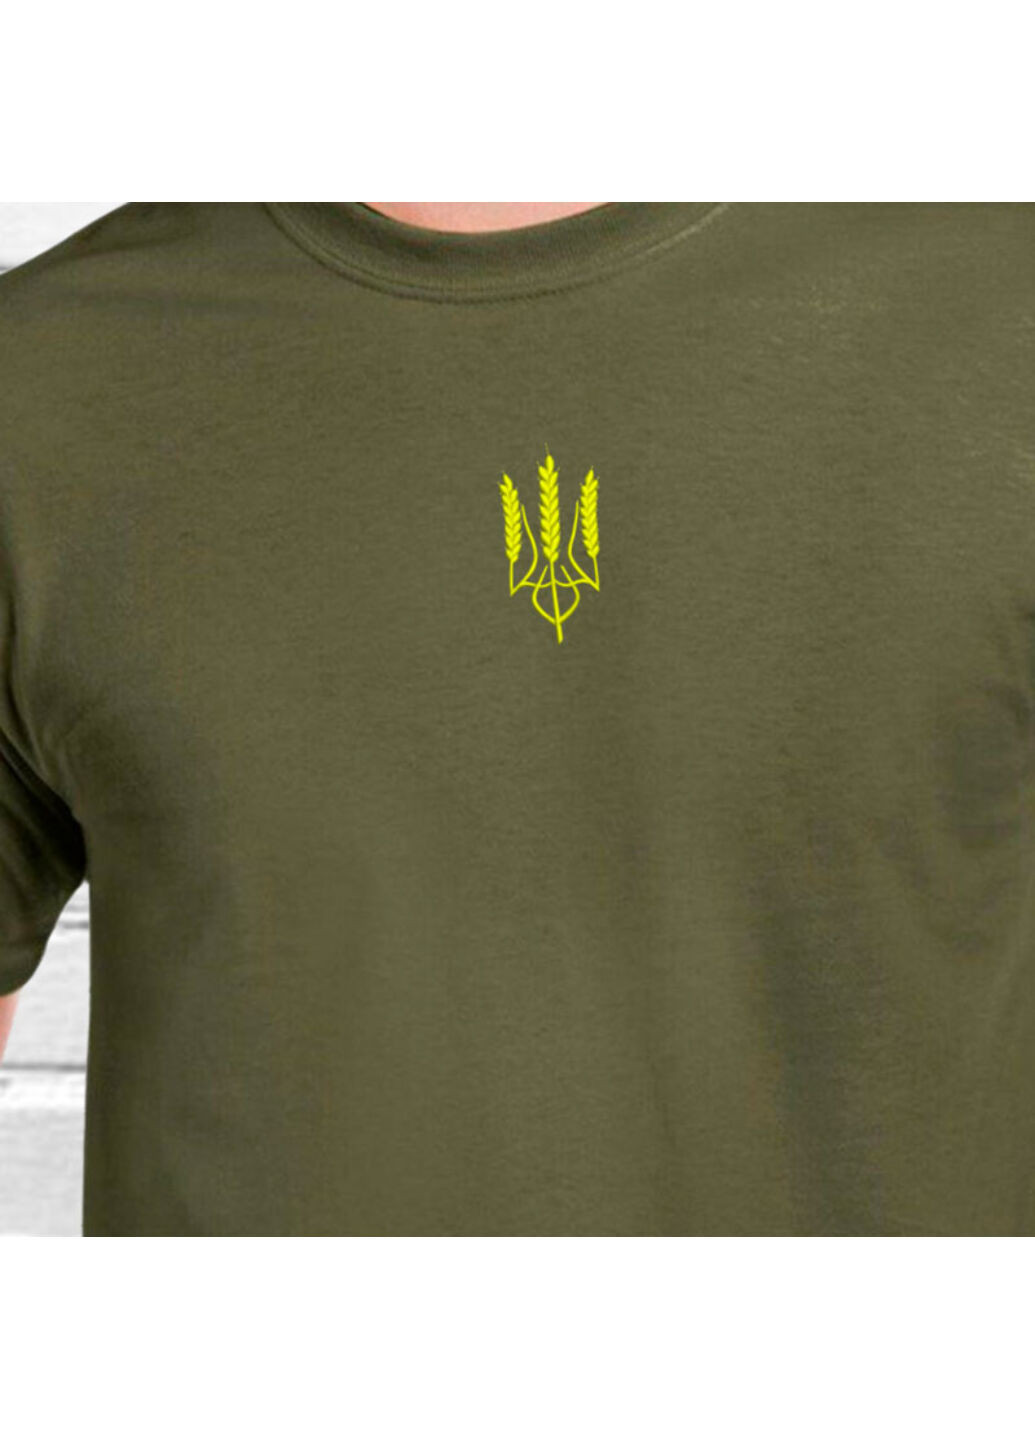 Хаки (оливковая) футболка з вишивкою тризуба 01-1 мужская хаки xl No Brand